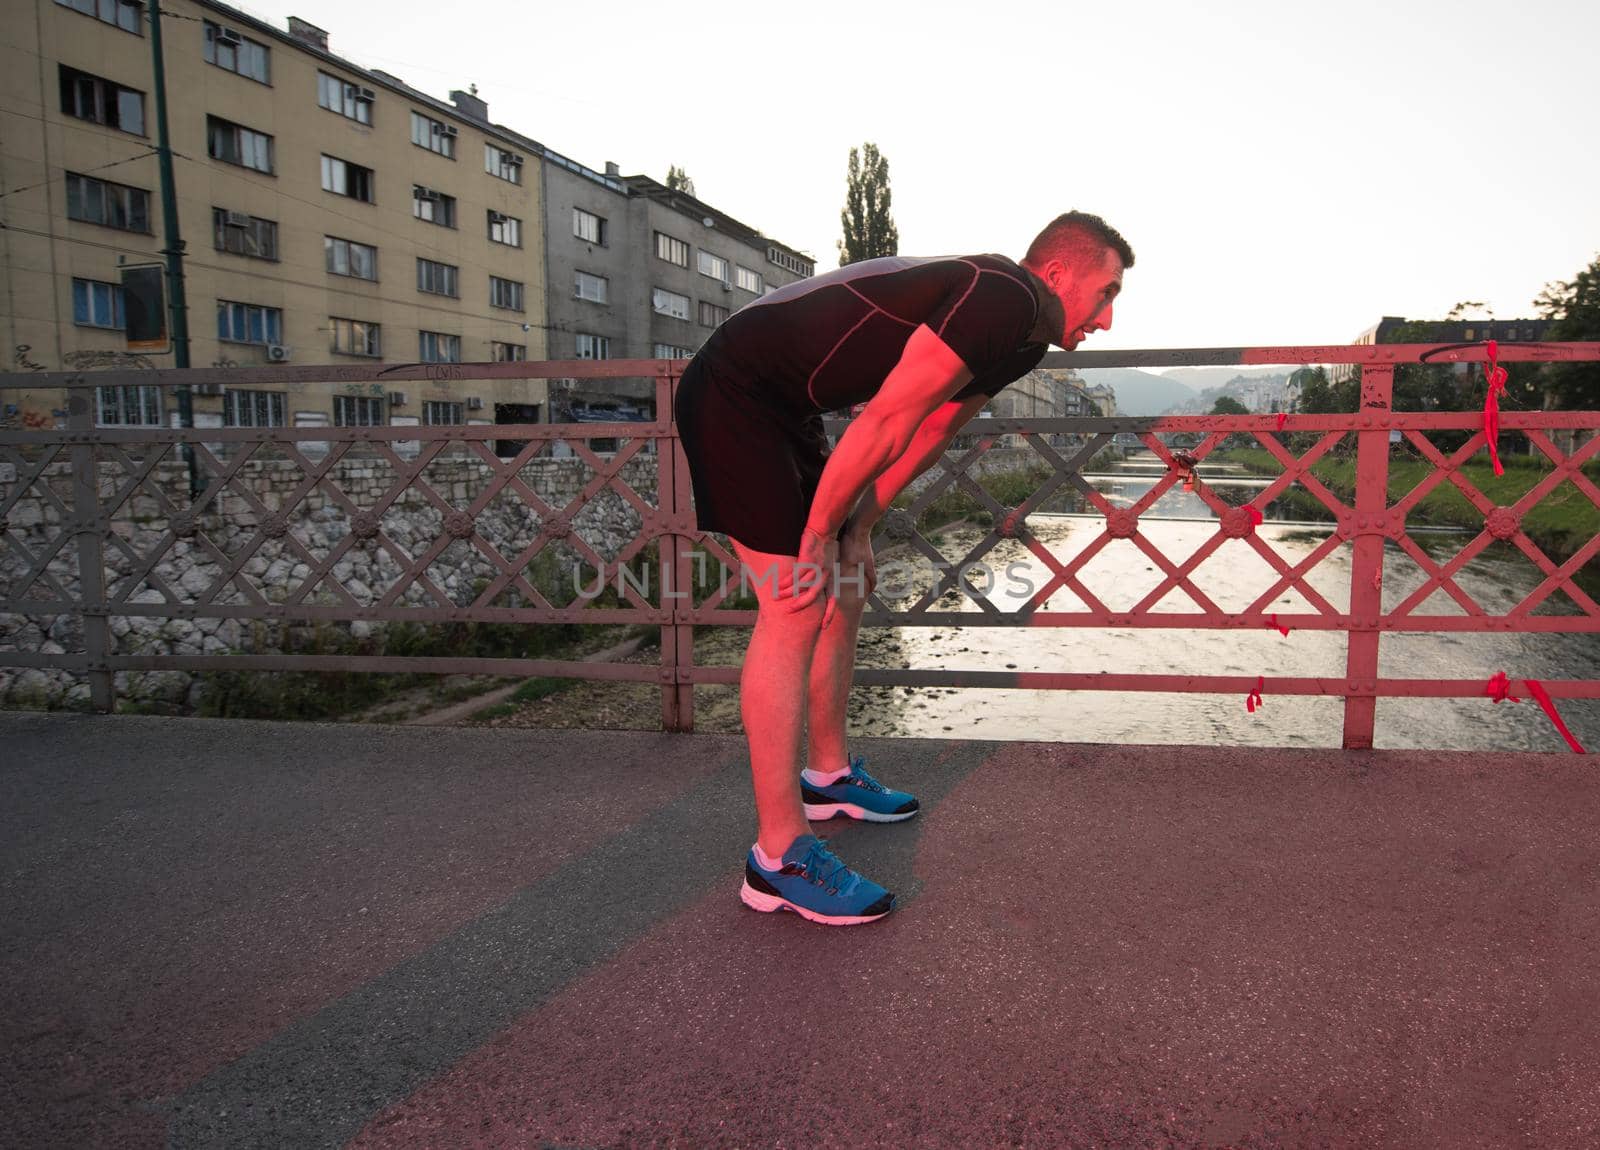 man jogging across the bridge at sunny morning by dotshock